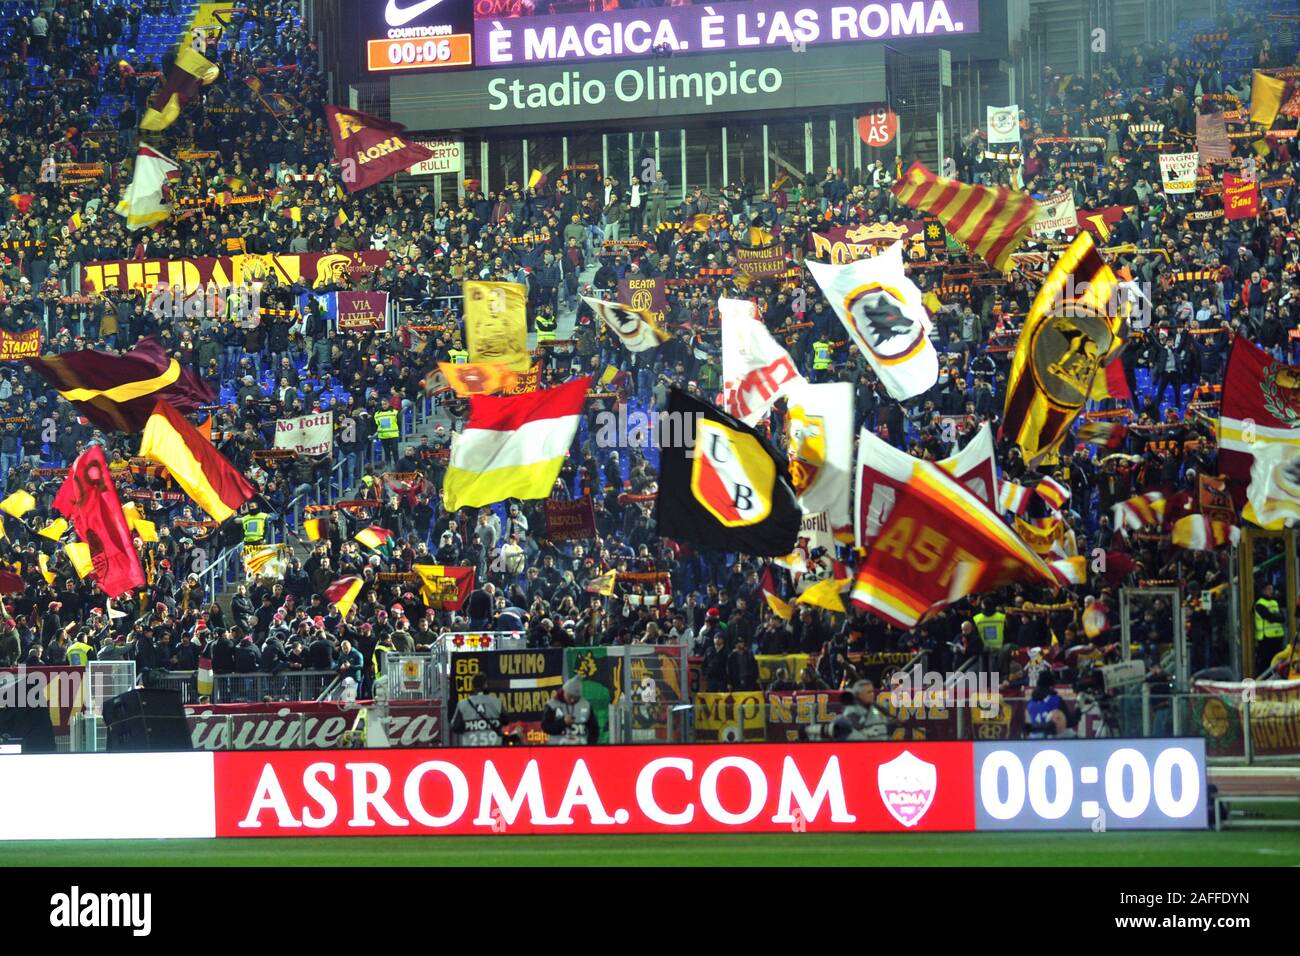 curva sud roma during Roma vs Spal, Roma, Italy, 15 Dec 2019, Soccer Italian Soccer Serie A Men Championship Stock Photo